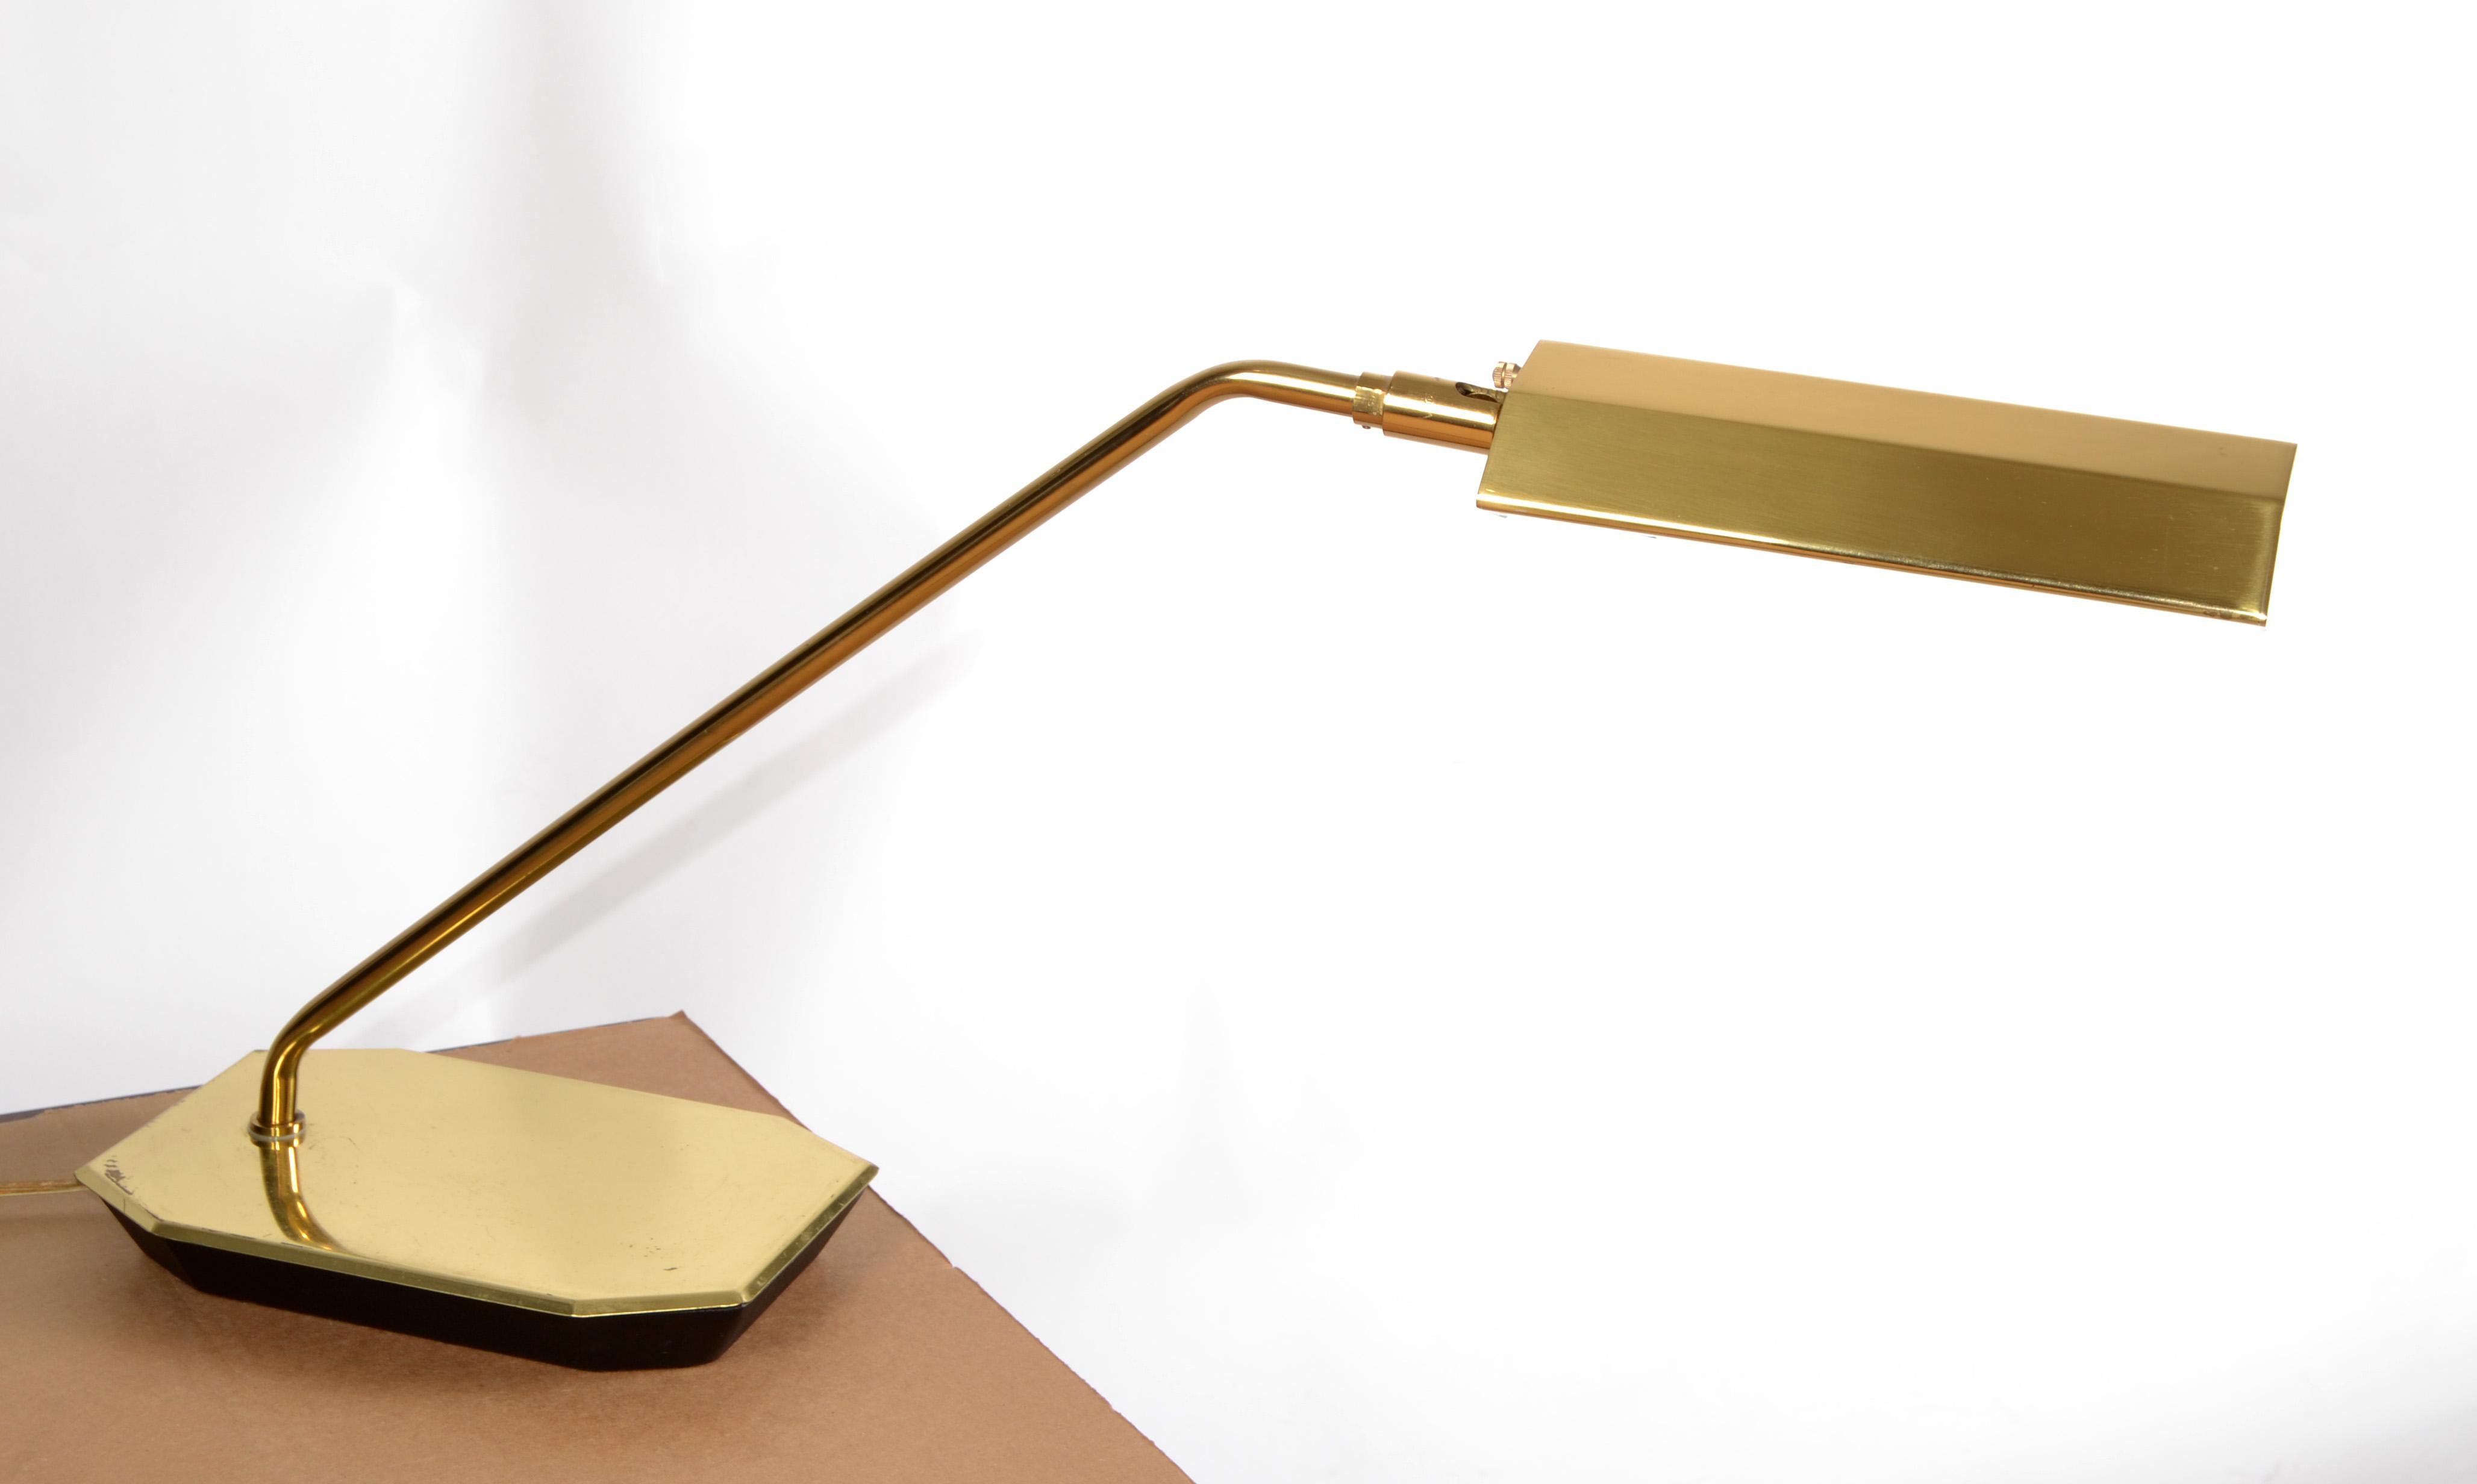 American Koch & Lowy Articulated Swing Brass Desk Lamp Mid-Century Modern 1965 Stamped For Sale